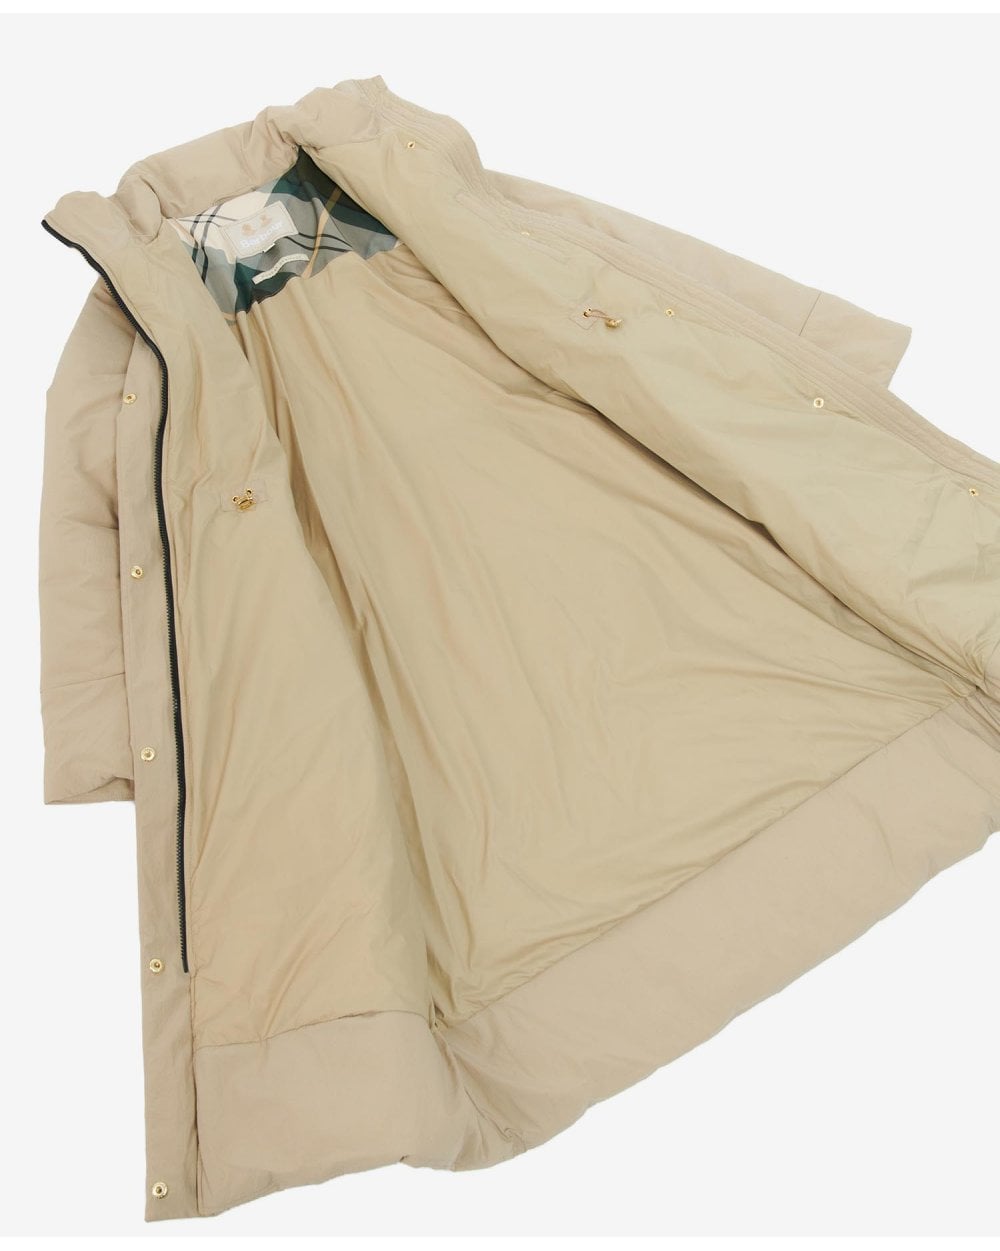 Firth Showerproof Jacket